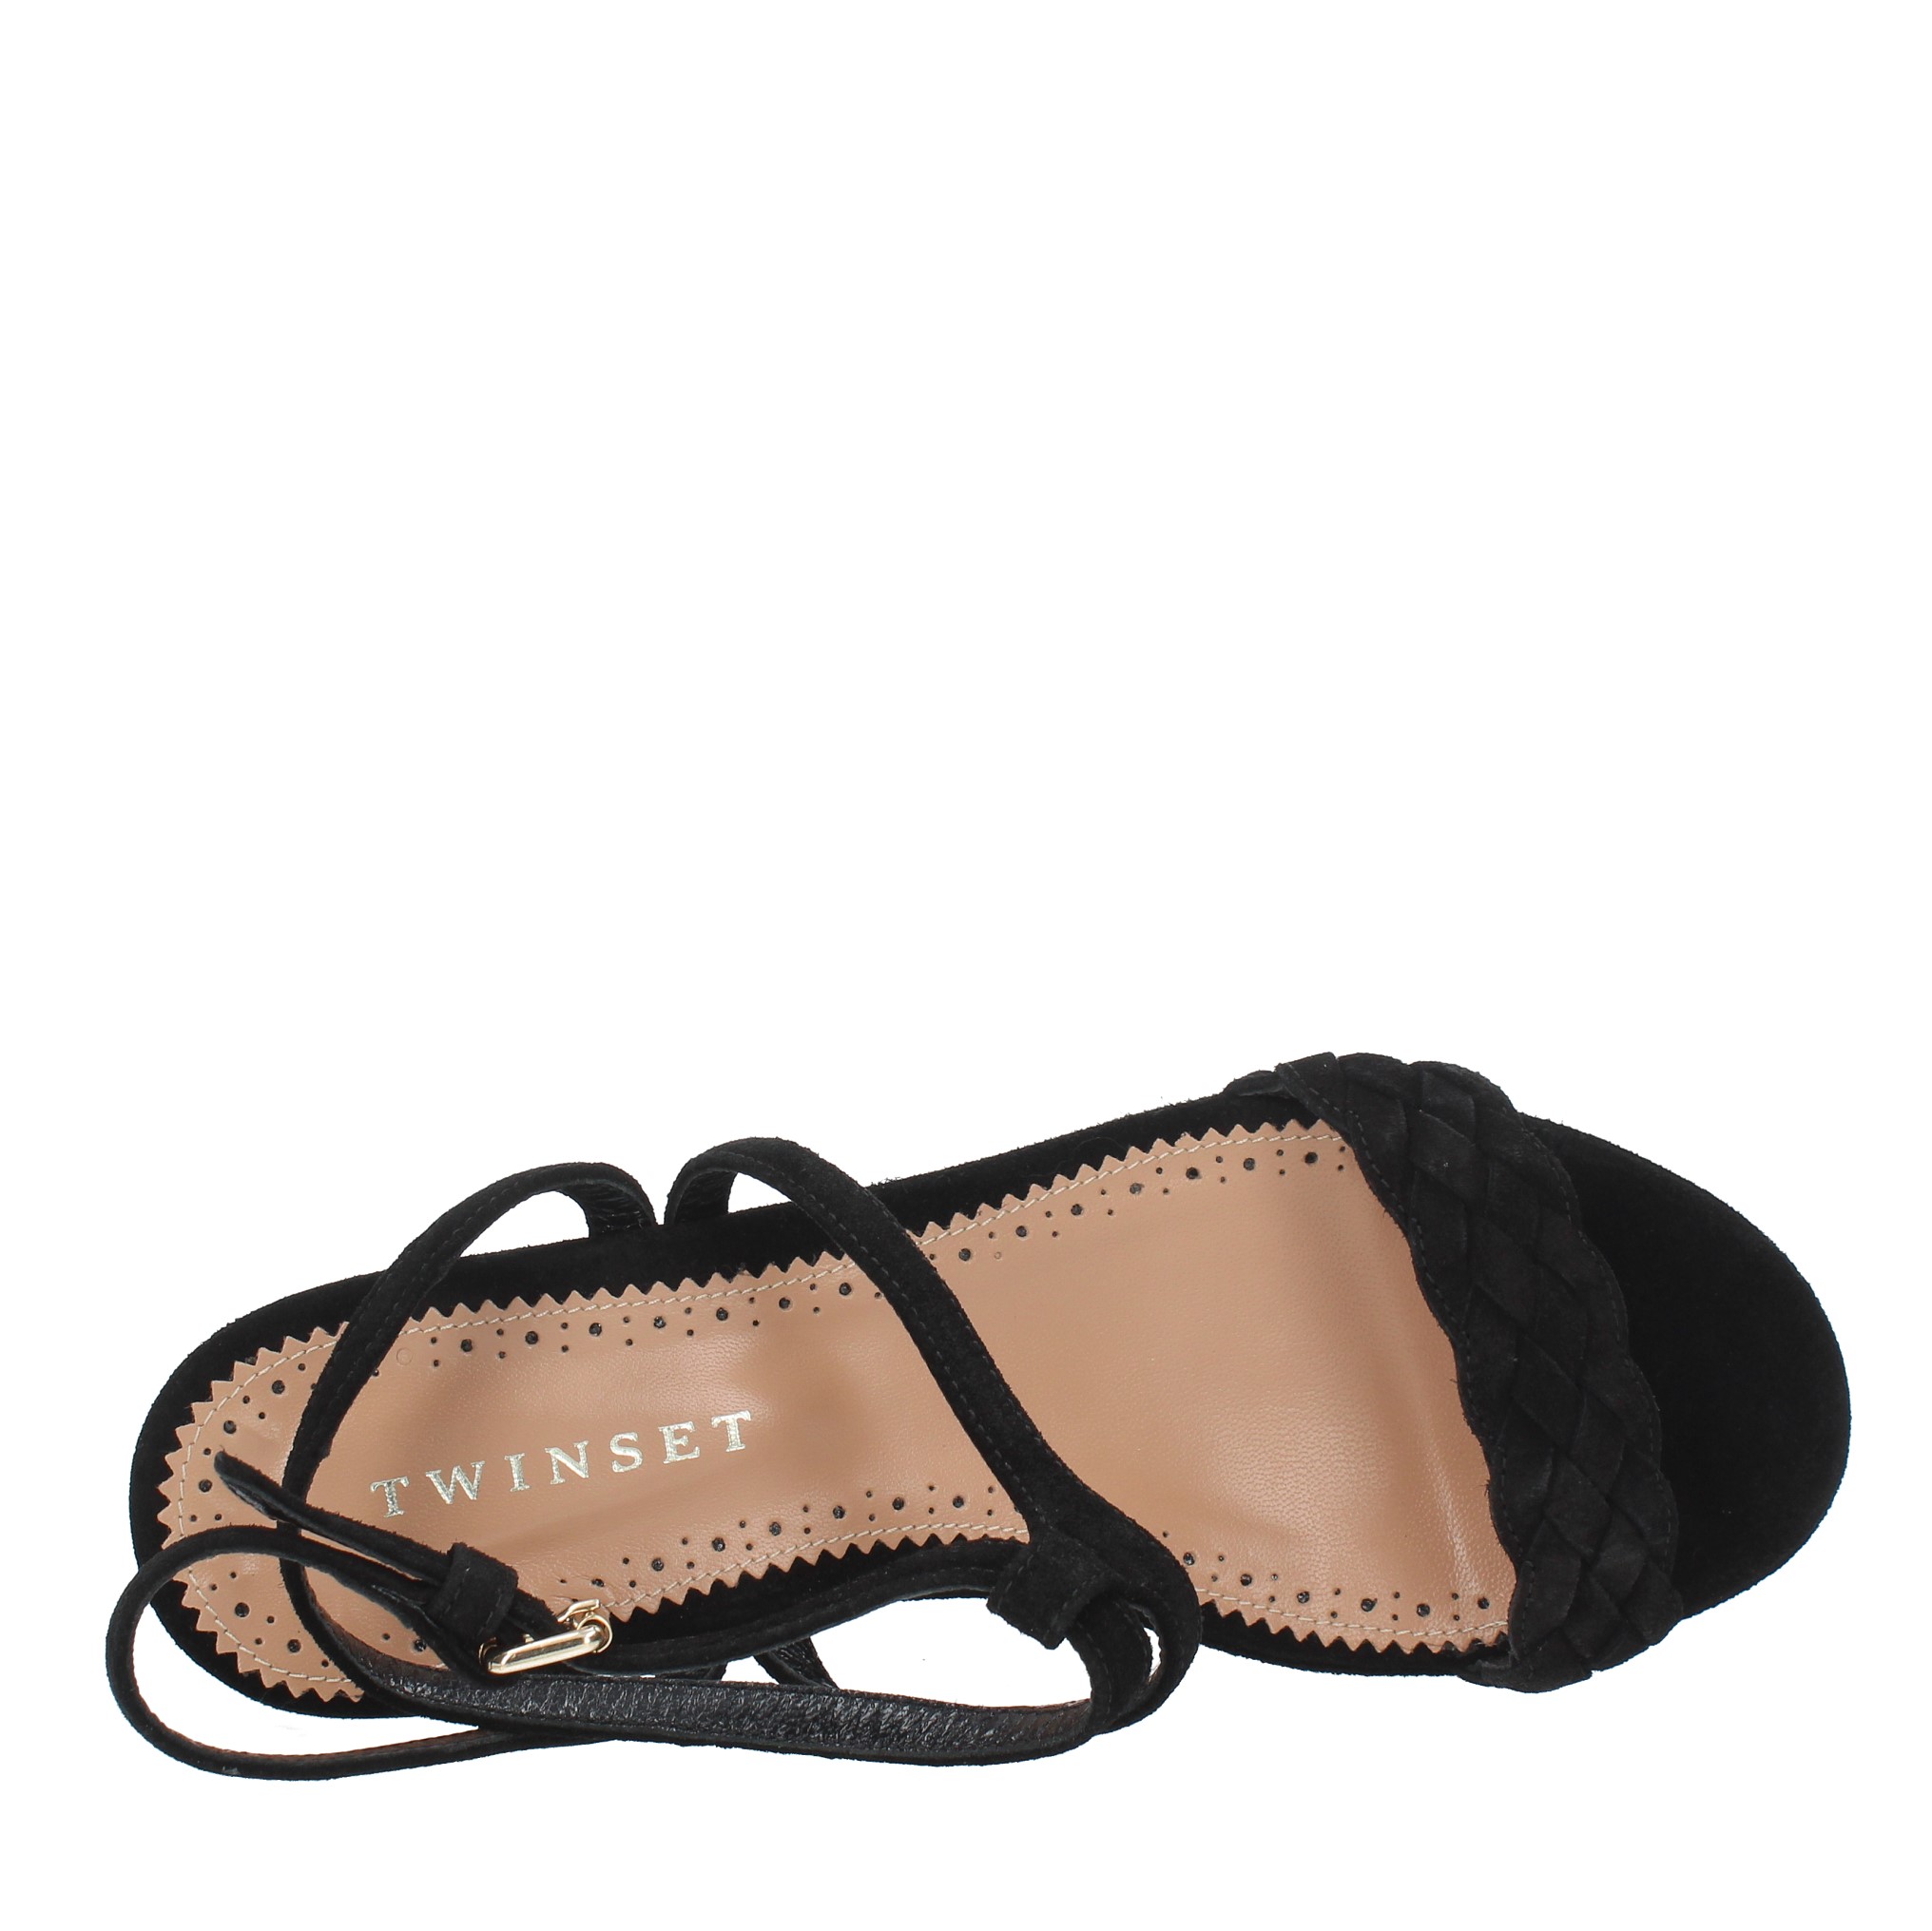 Sandals Black - TWINSET - Ginevra calzature